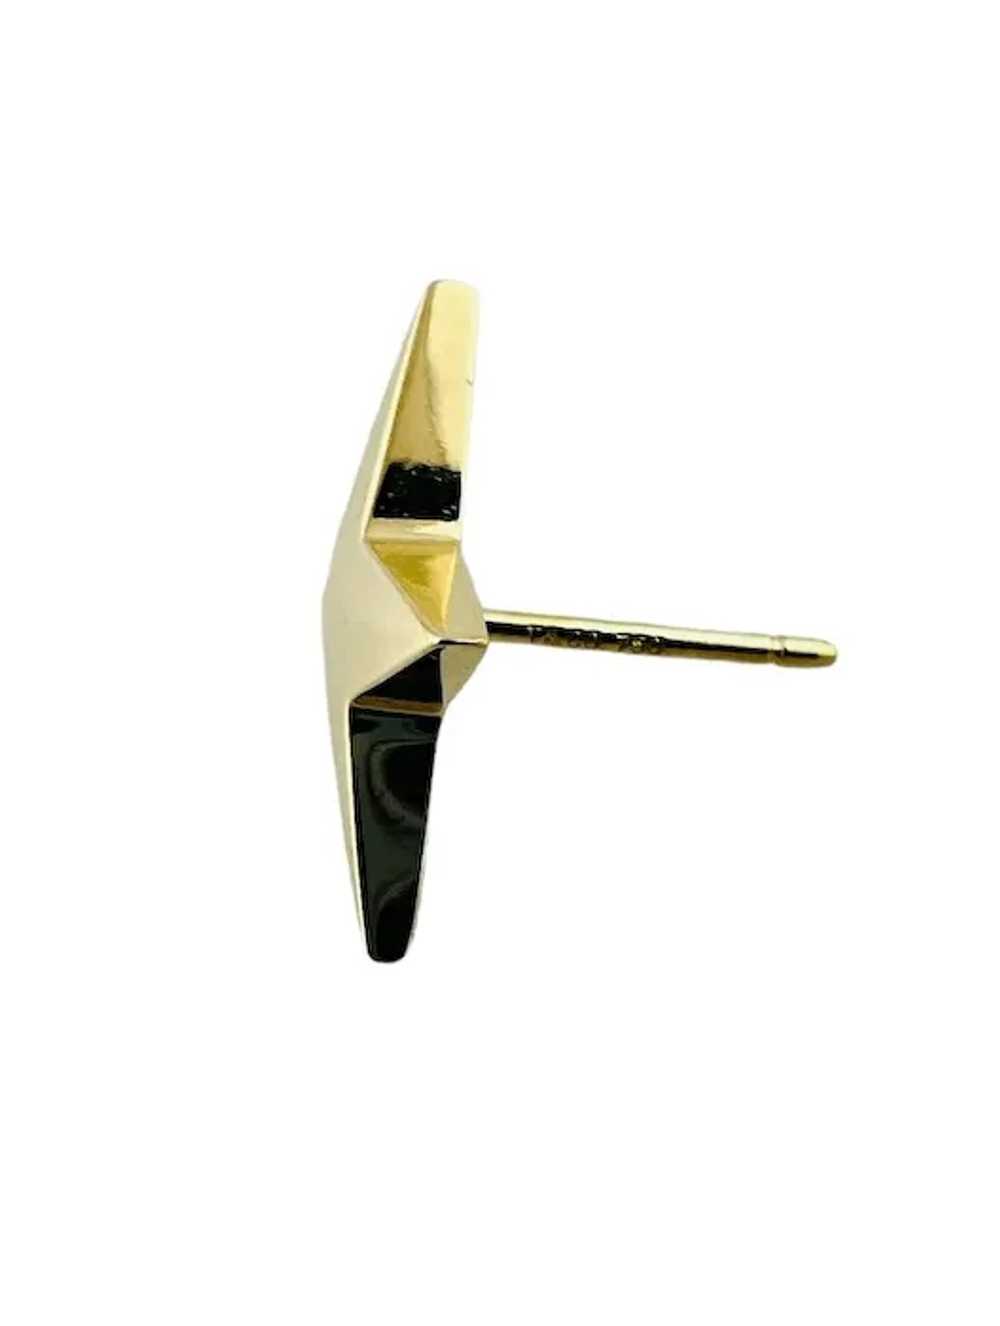 Tiffany & Co. 18K Yellow Gold Star Earrings #16677 - image 4